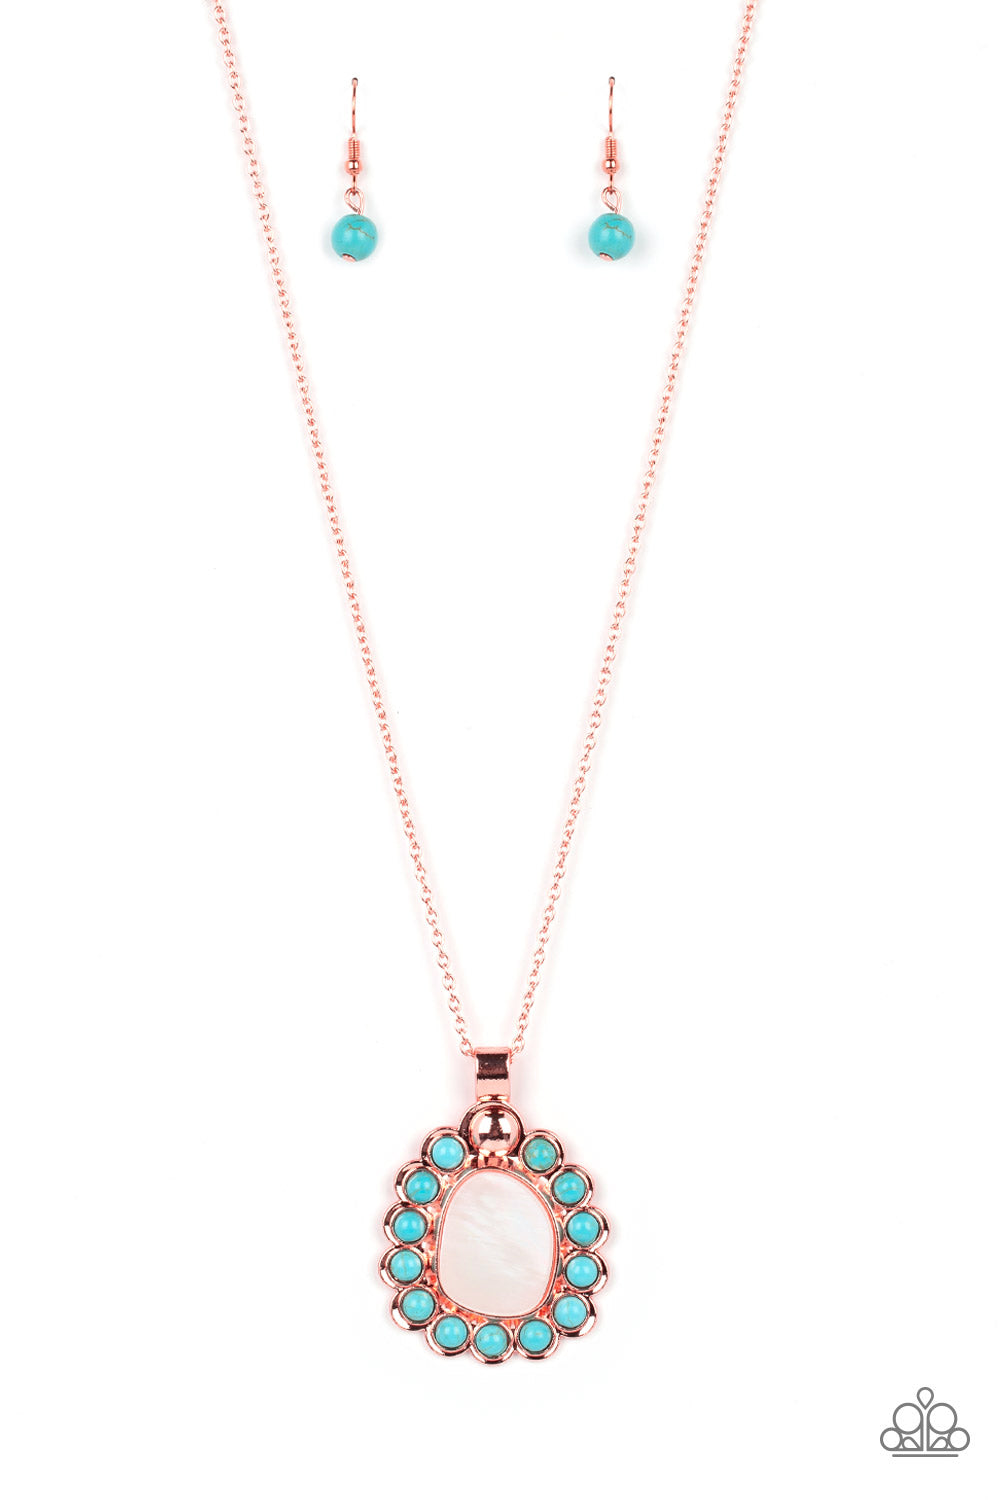 Sahara Sea Copper
Necklace